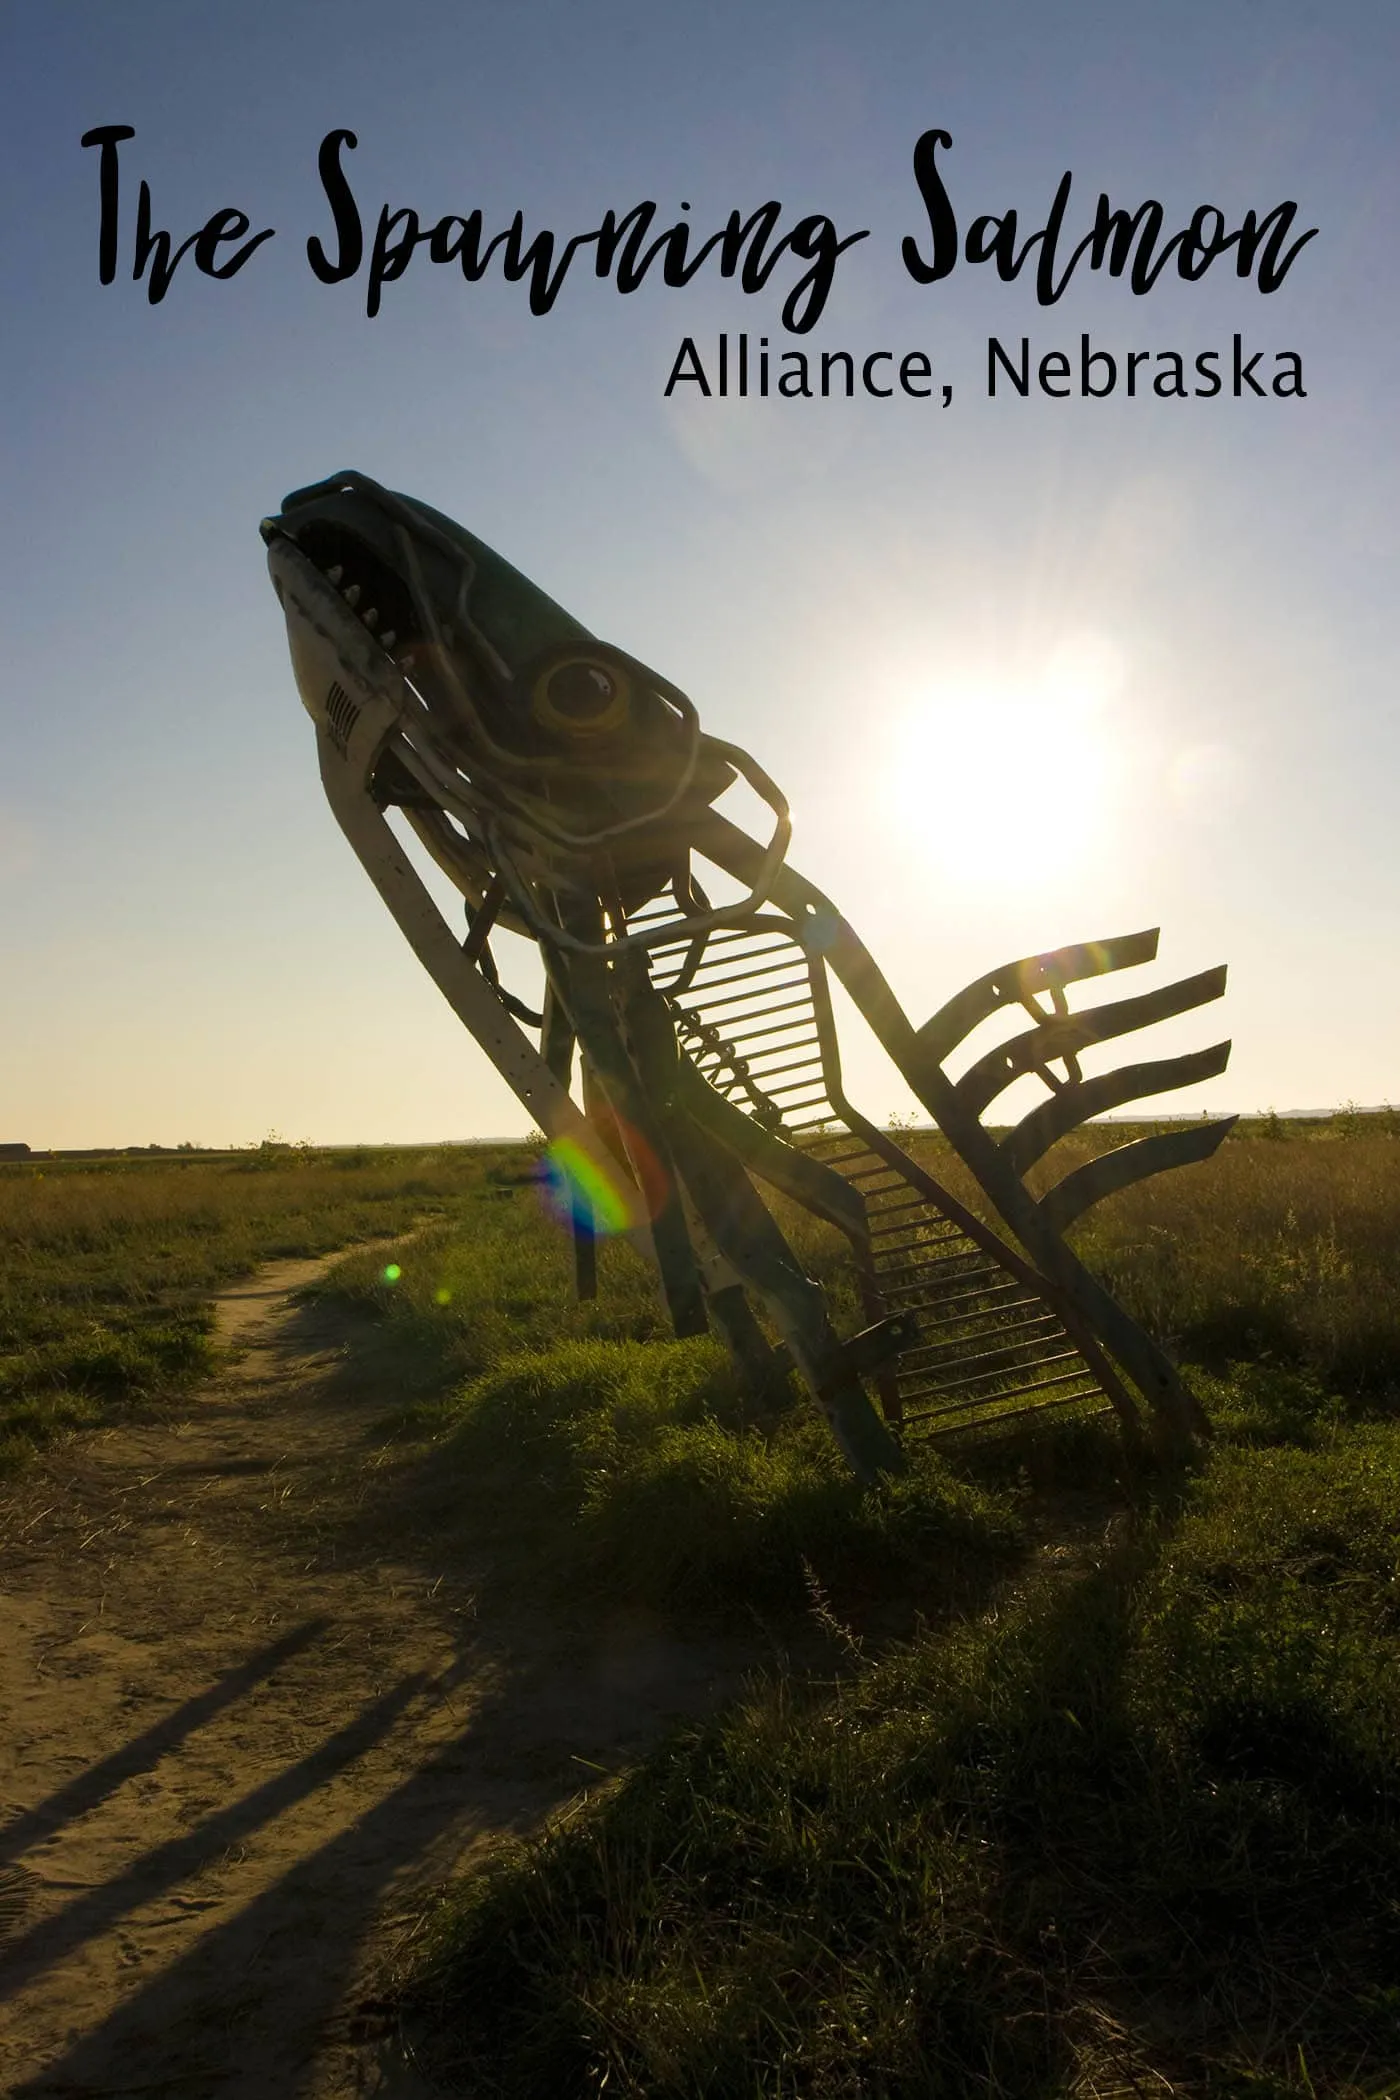 The Spawning Salmon sculpture at Carhenge Roadside Attraction in Alliance, Nebraska